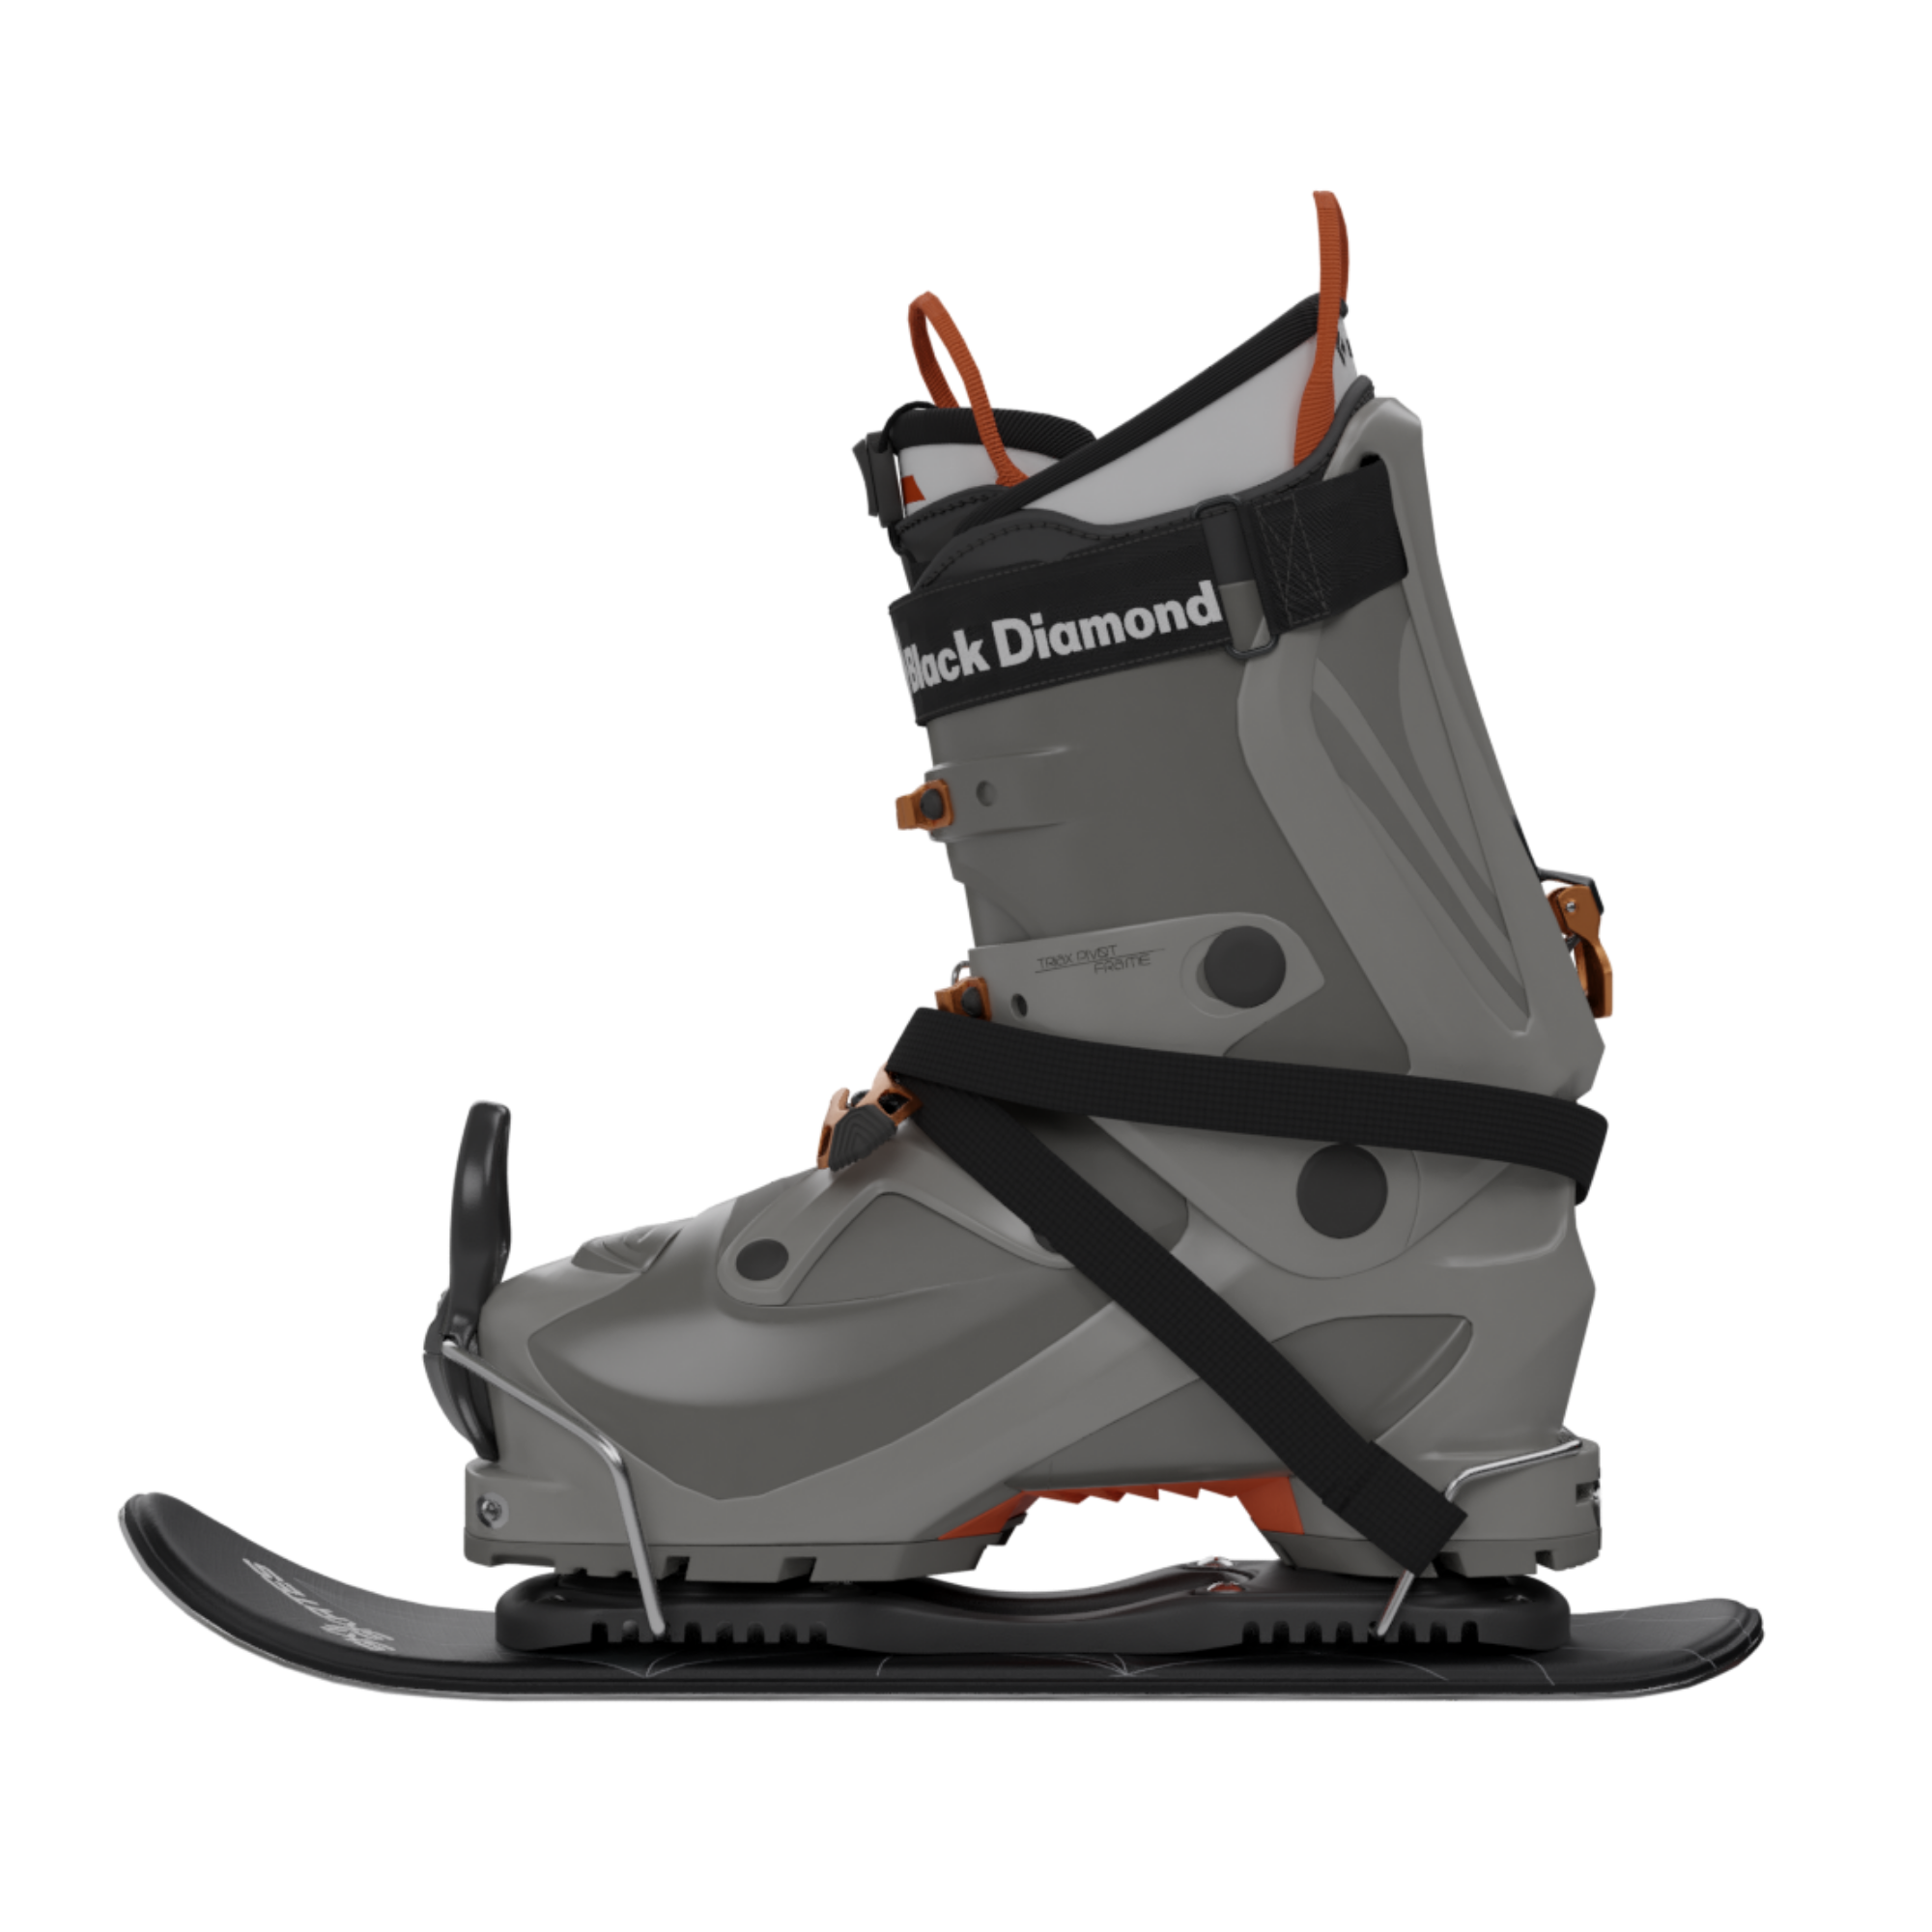 Skiskates - Mini Ski Skates | Ski Boots Model - Official Product